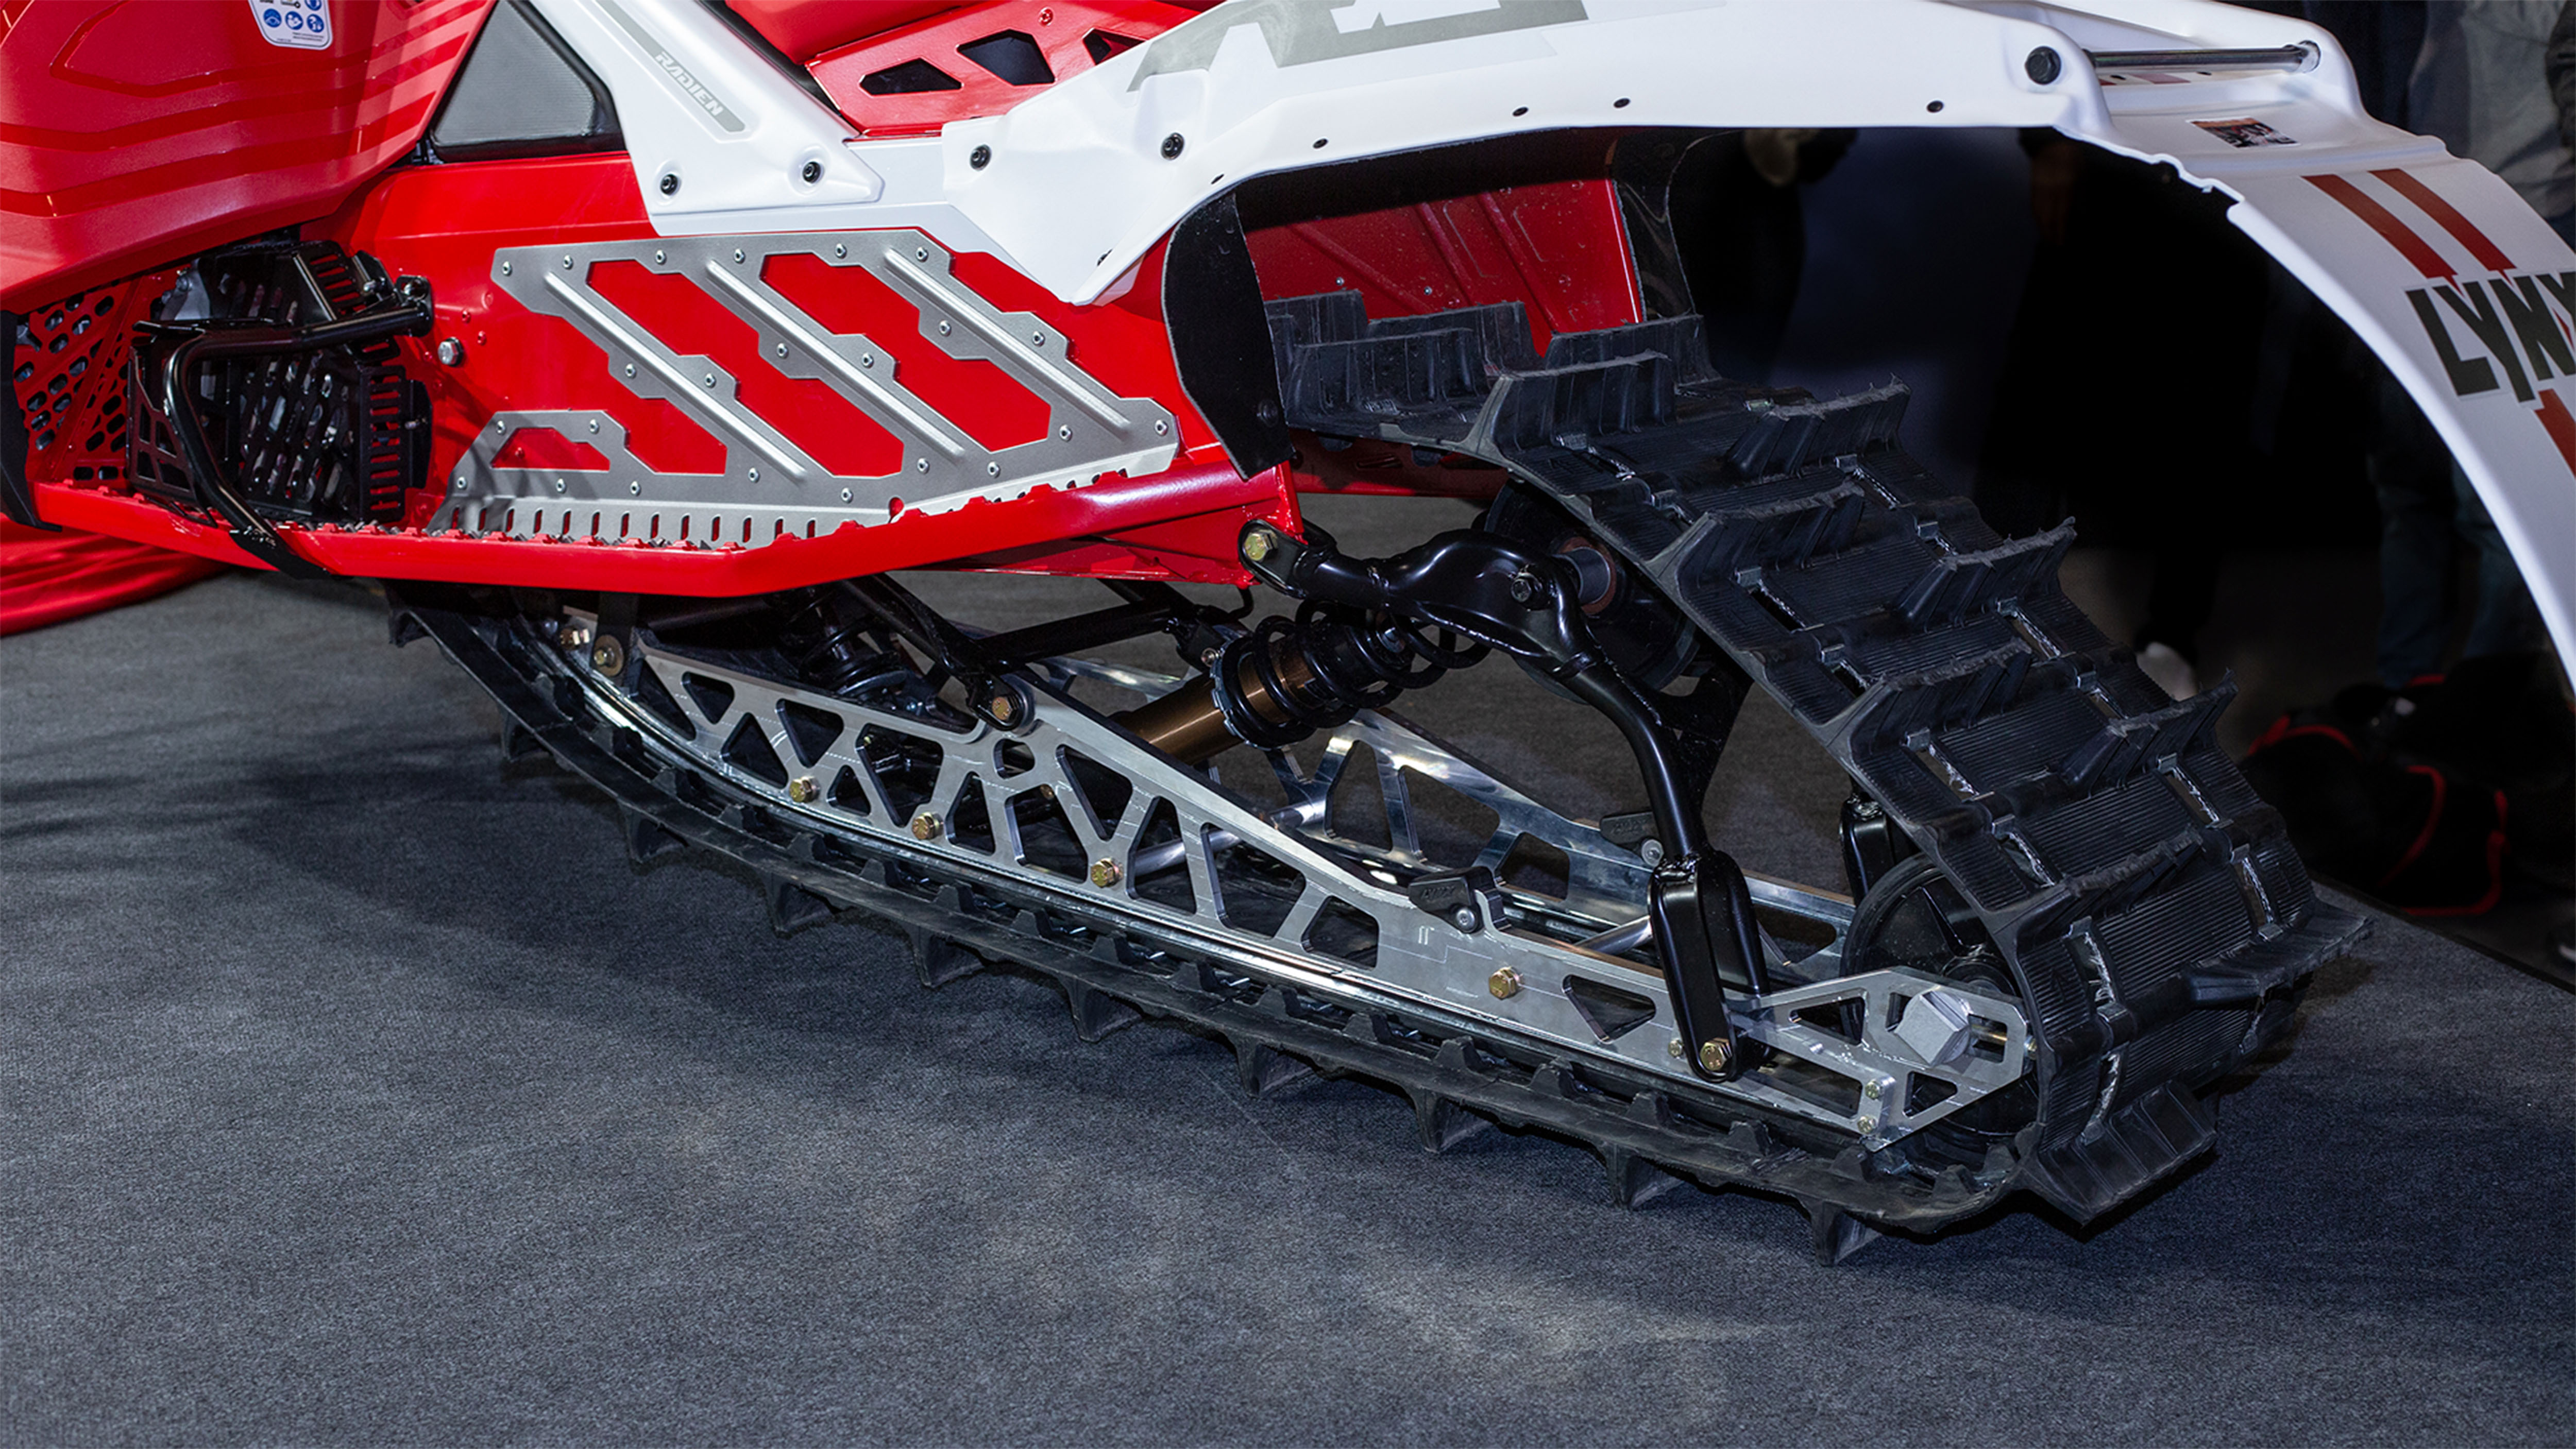 Lynx rCTRL rear suspension in Rave RS racing snowmobile